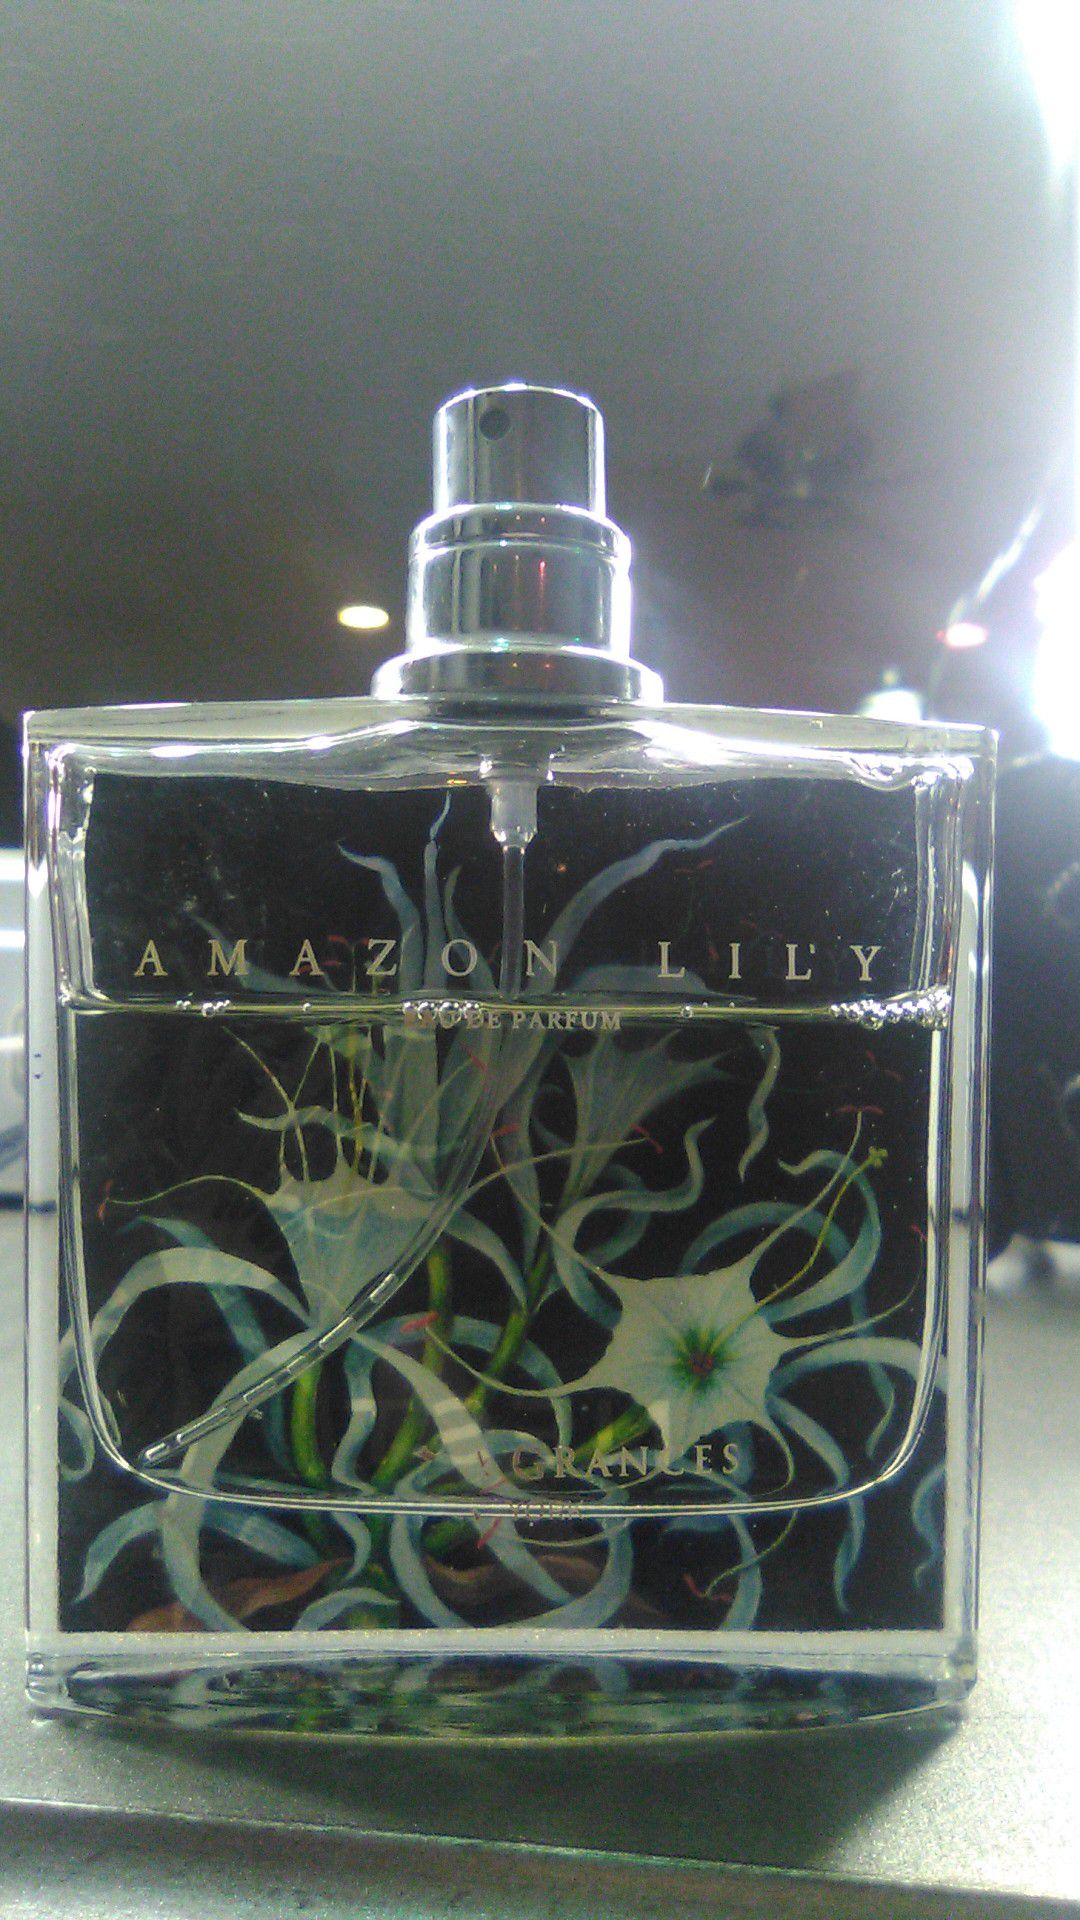 Nest fragrance Amazon lily